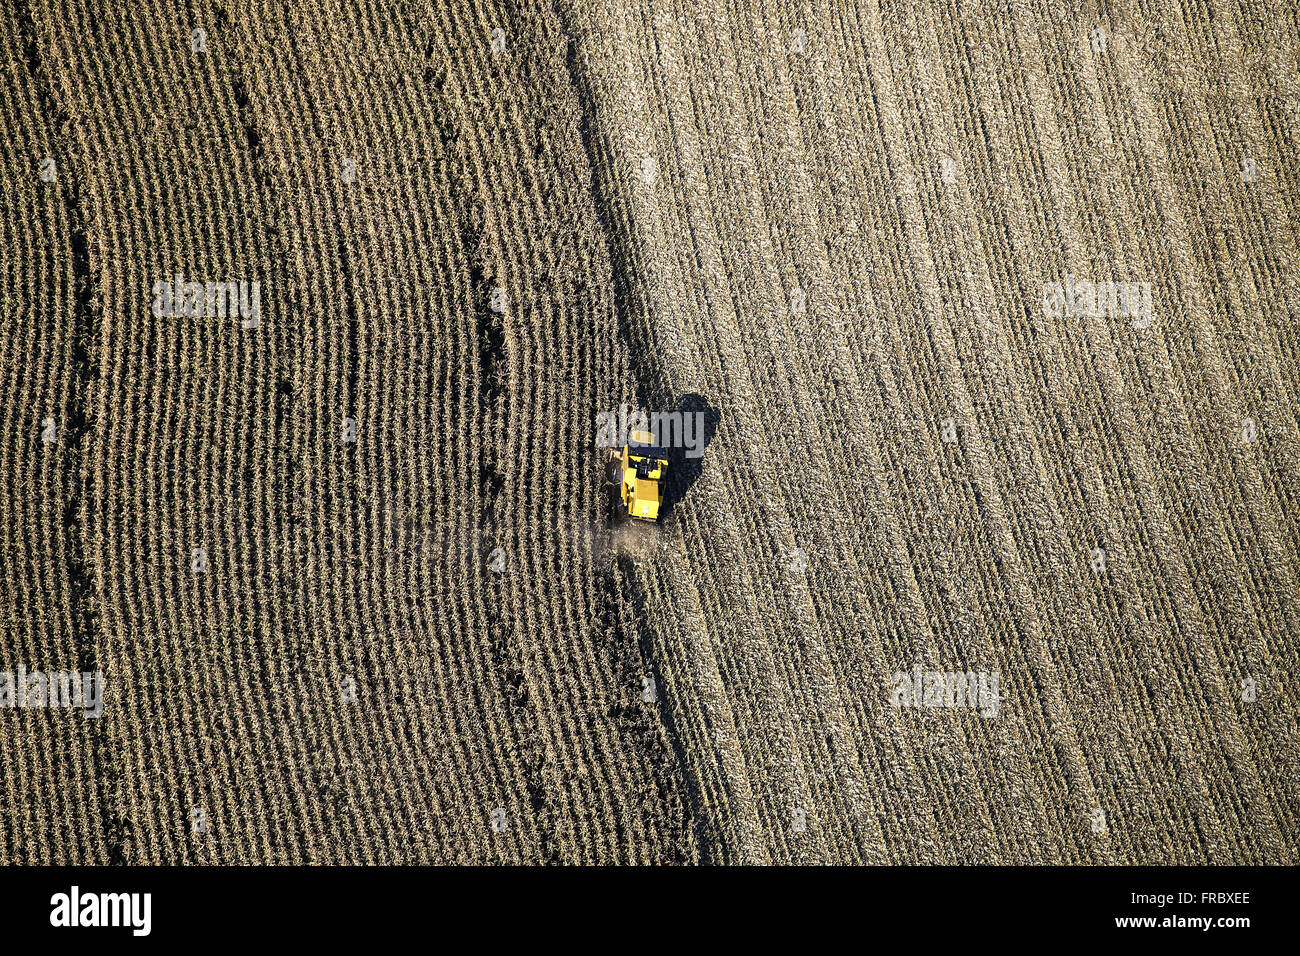 Aerial view of combine harvesting corn Stock Photo